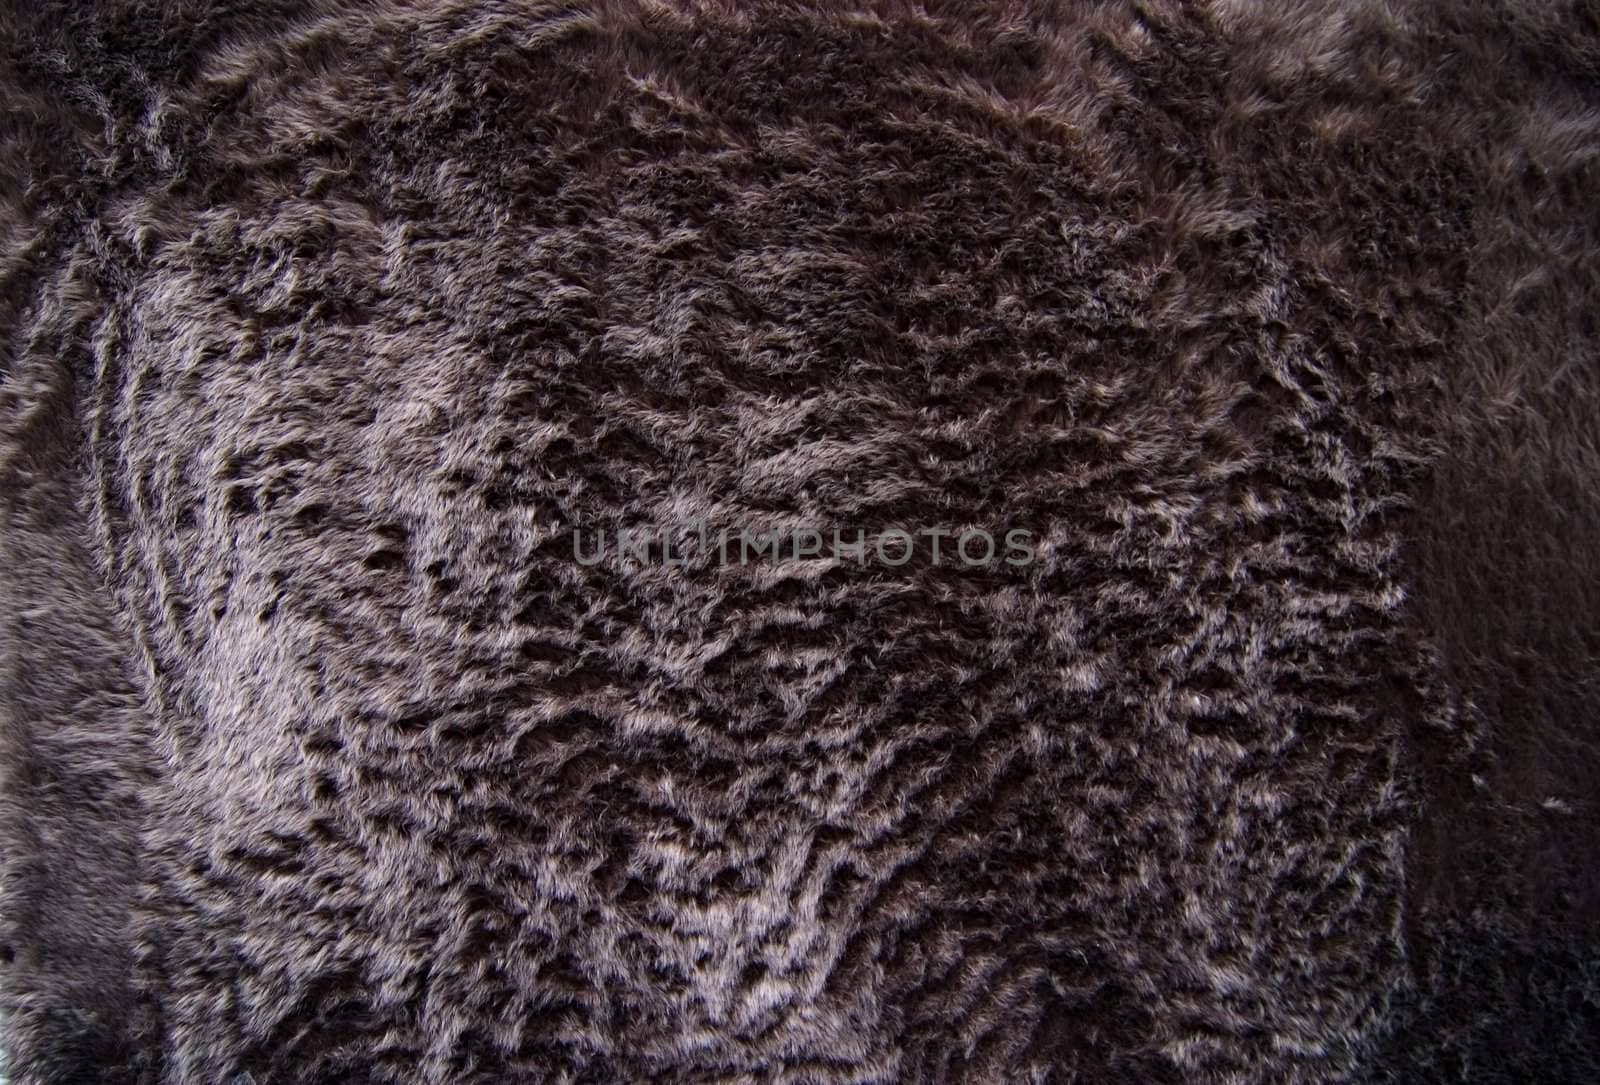 A black fun fur textile texture image.